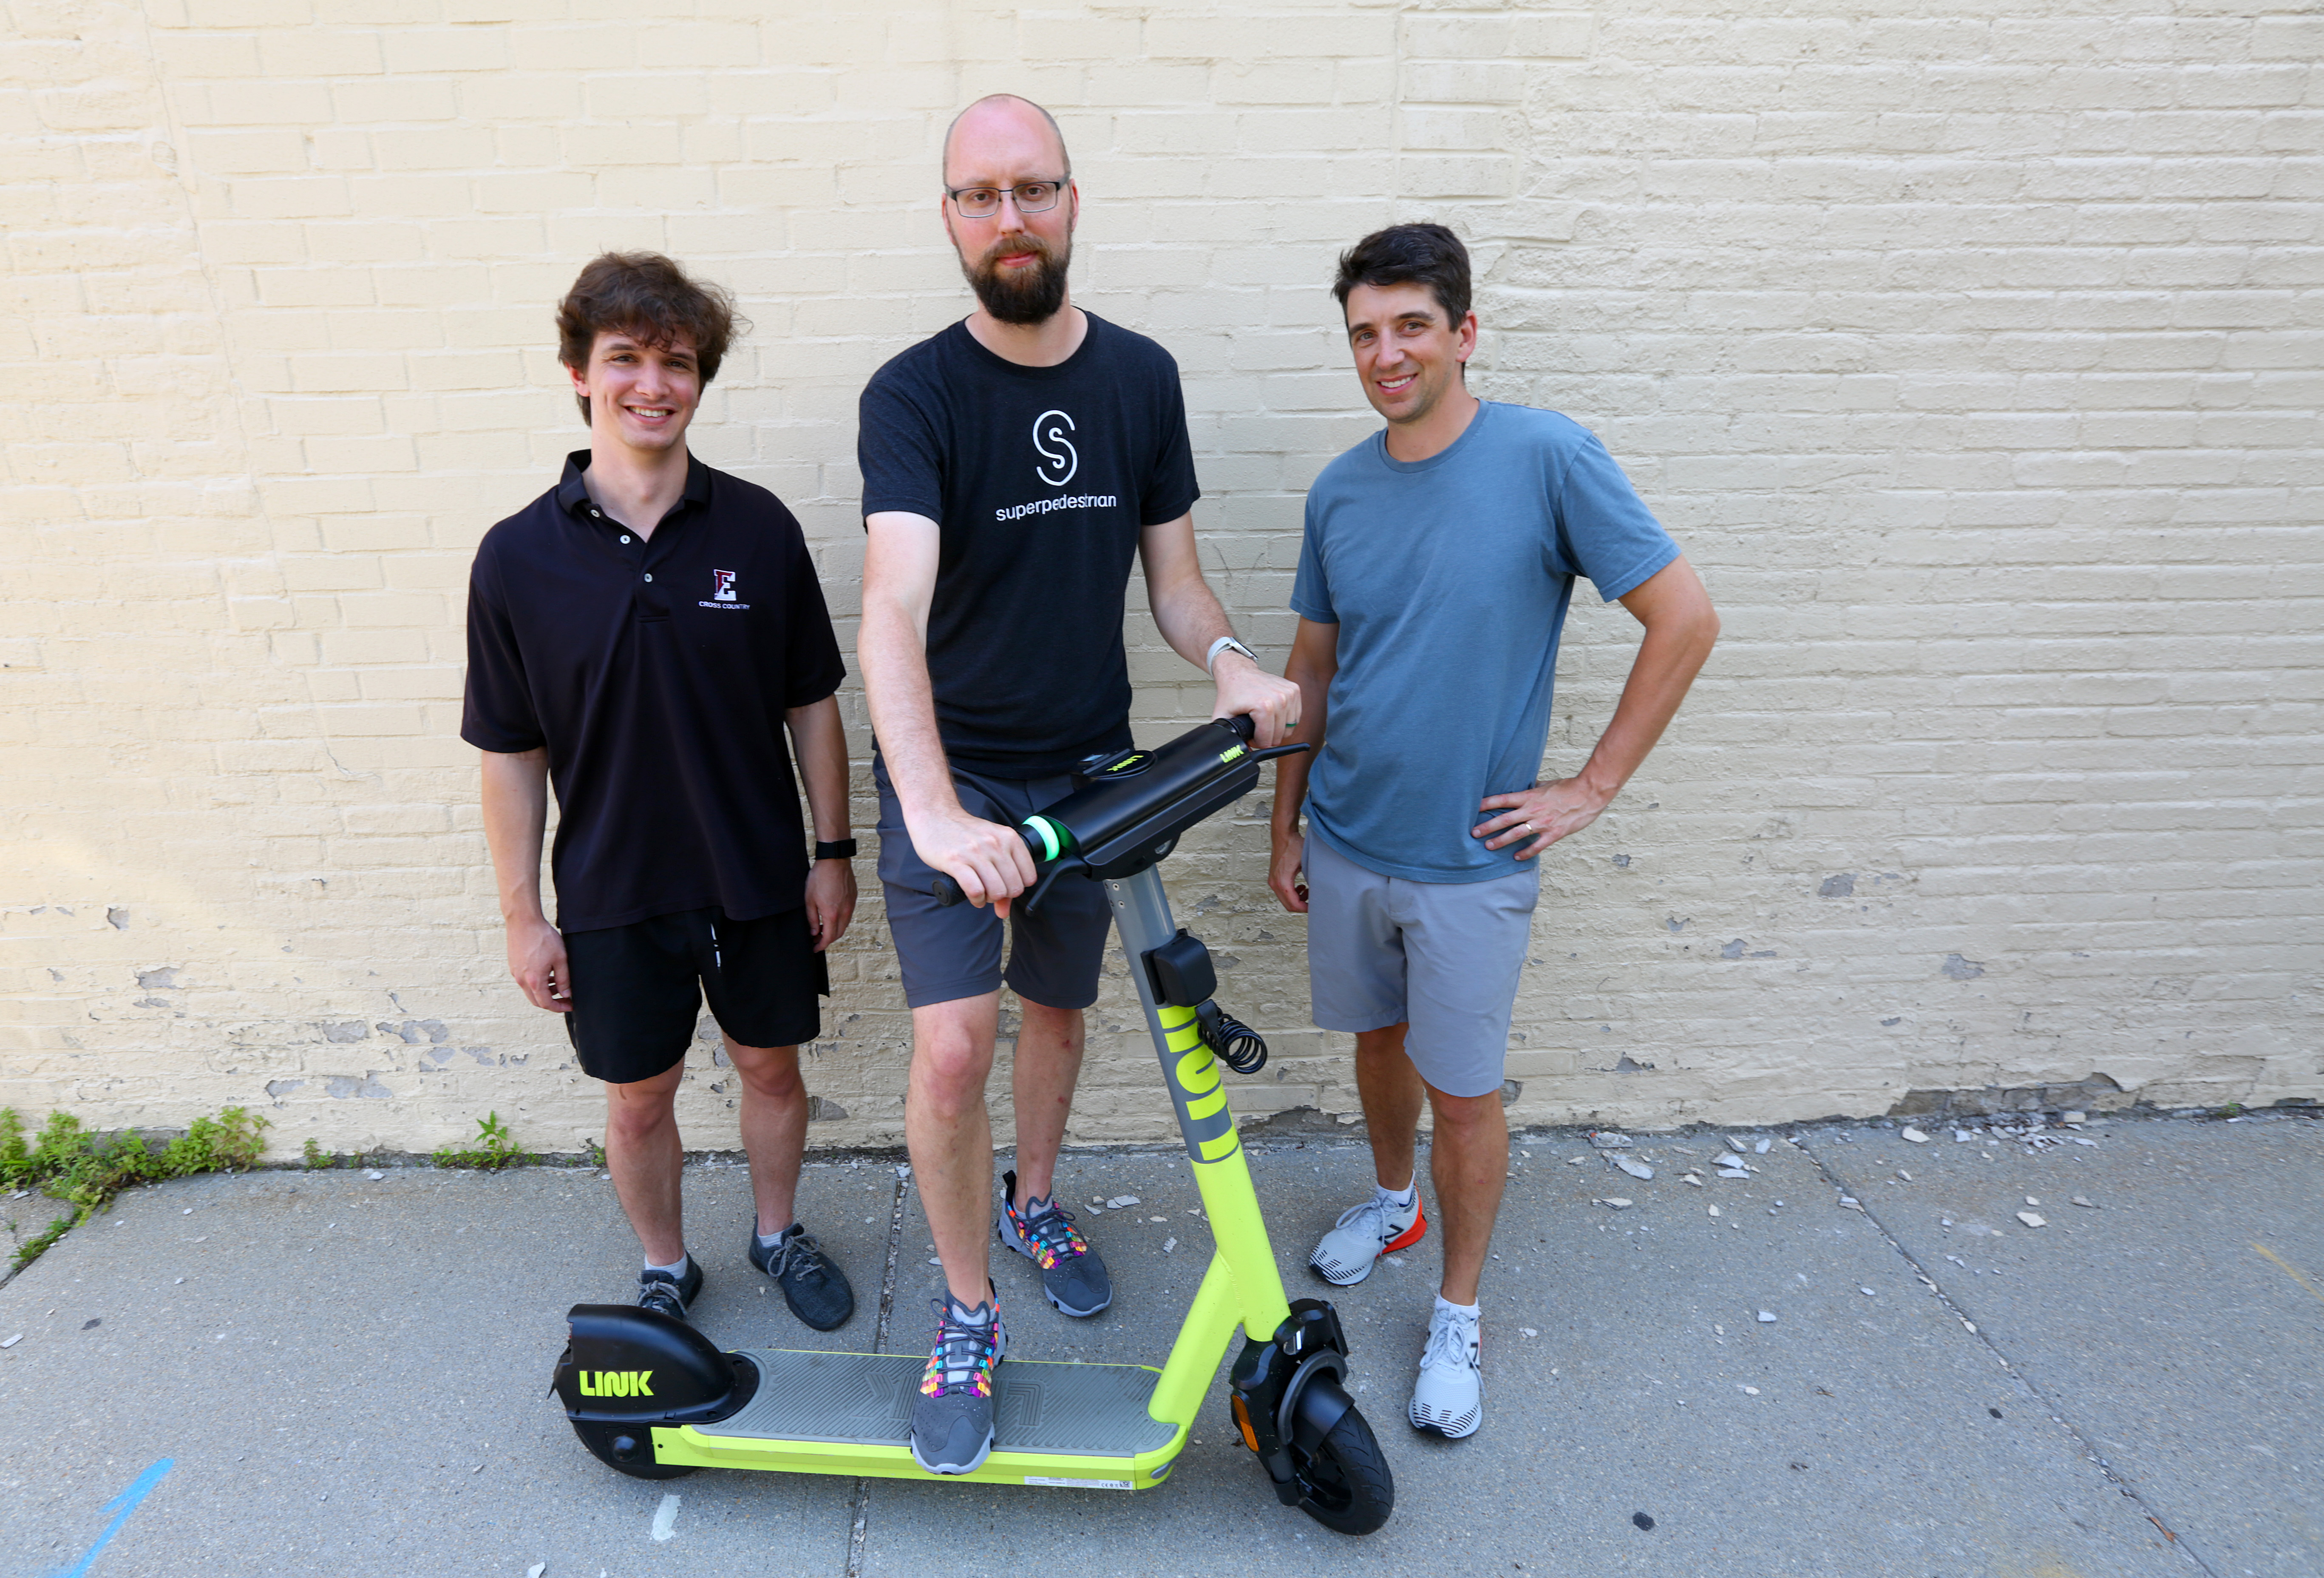 Cambridge scooter startup on Silicon Valley - The Boston Globe